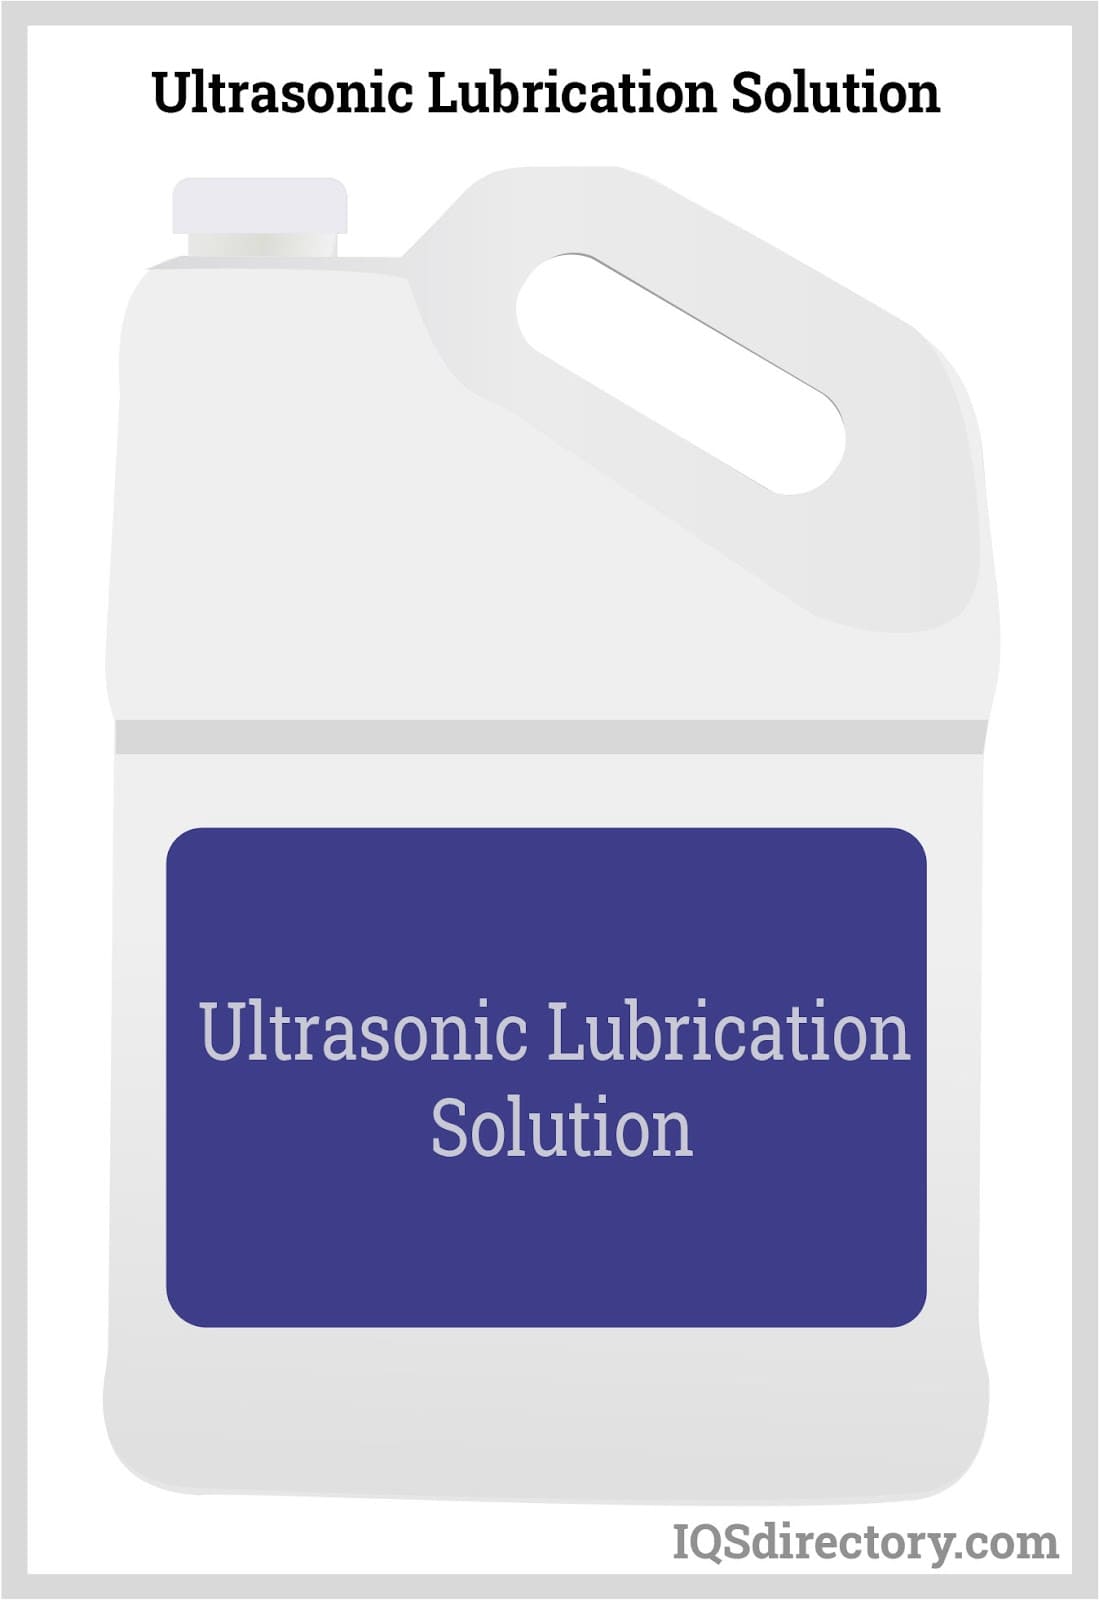 Ultrasonic Lubrication Solution